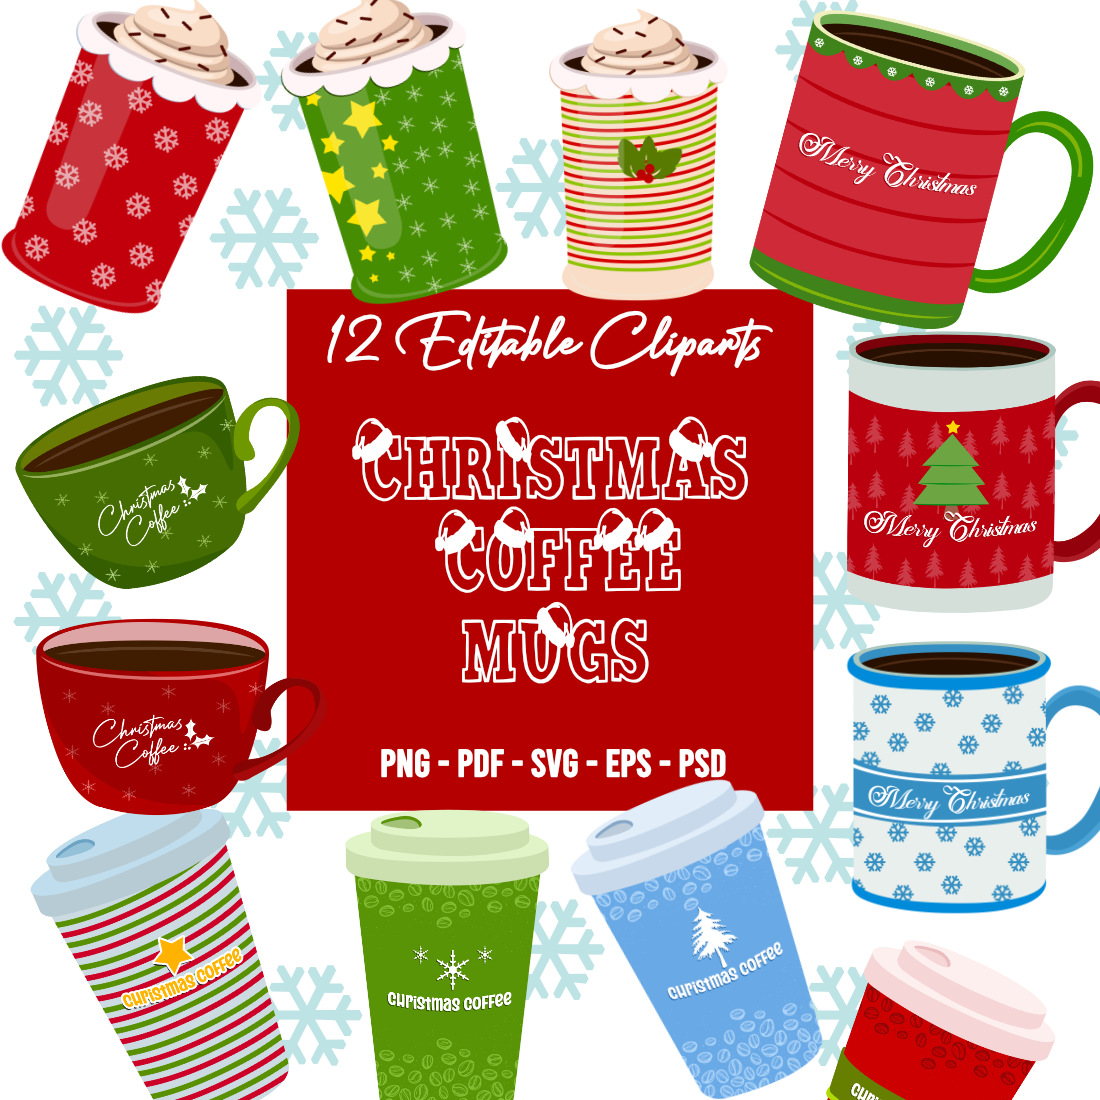 Christmas Coffee Mugs Designs cover image.